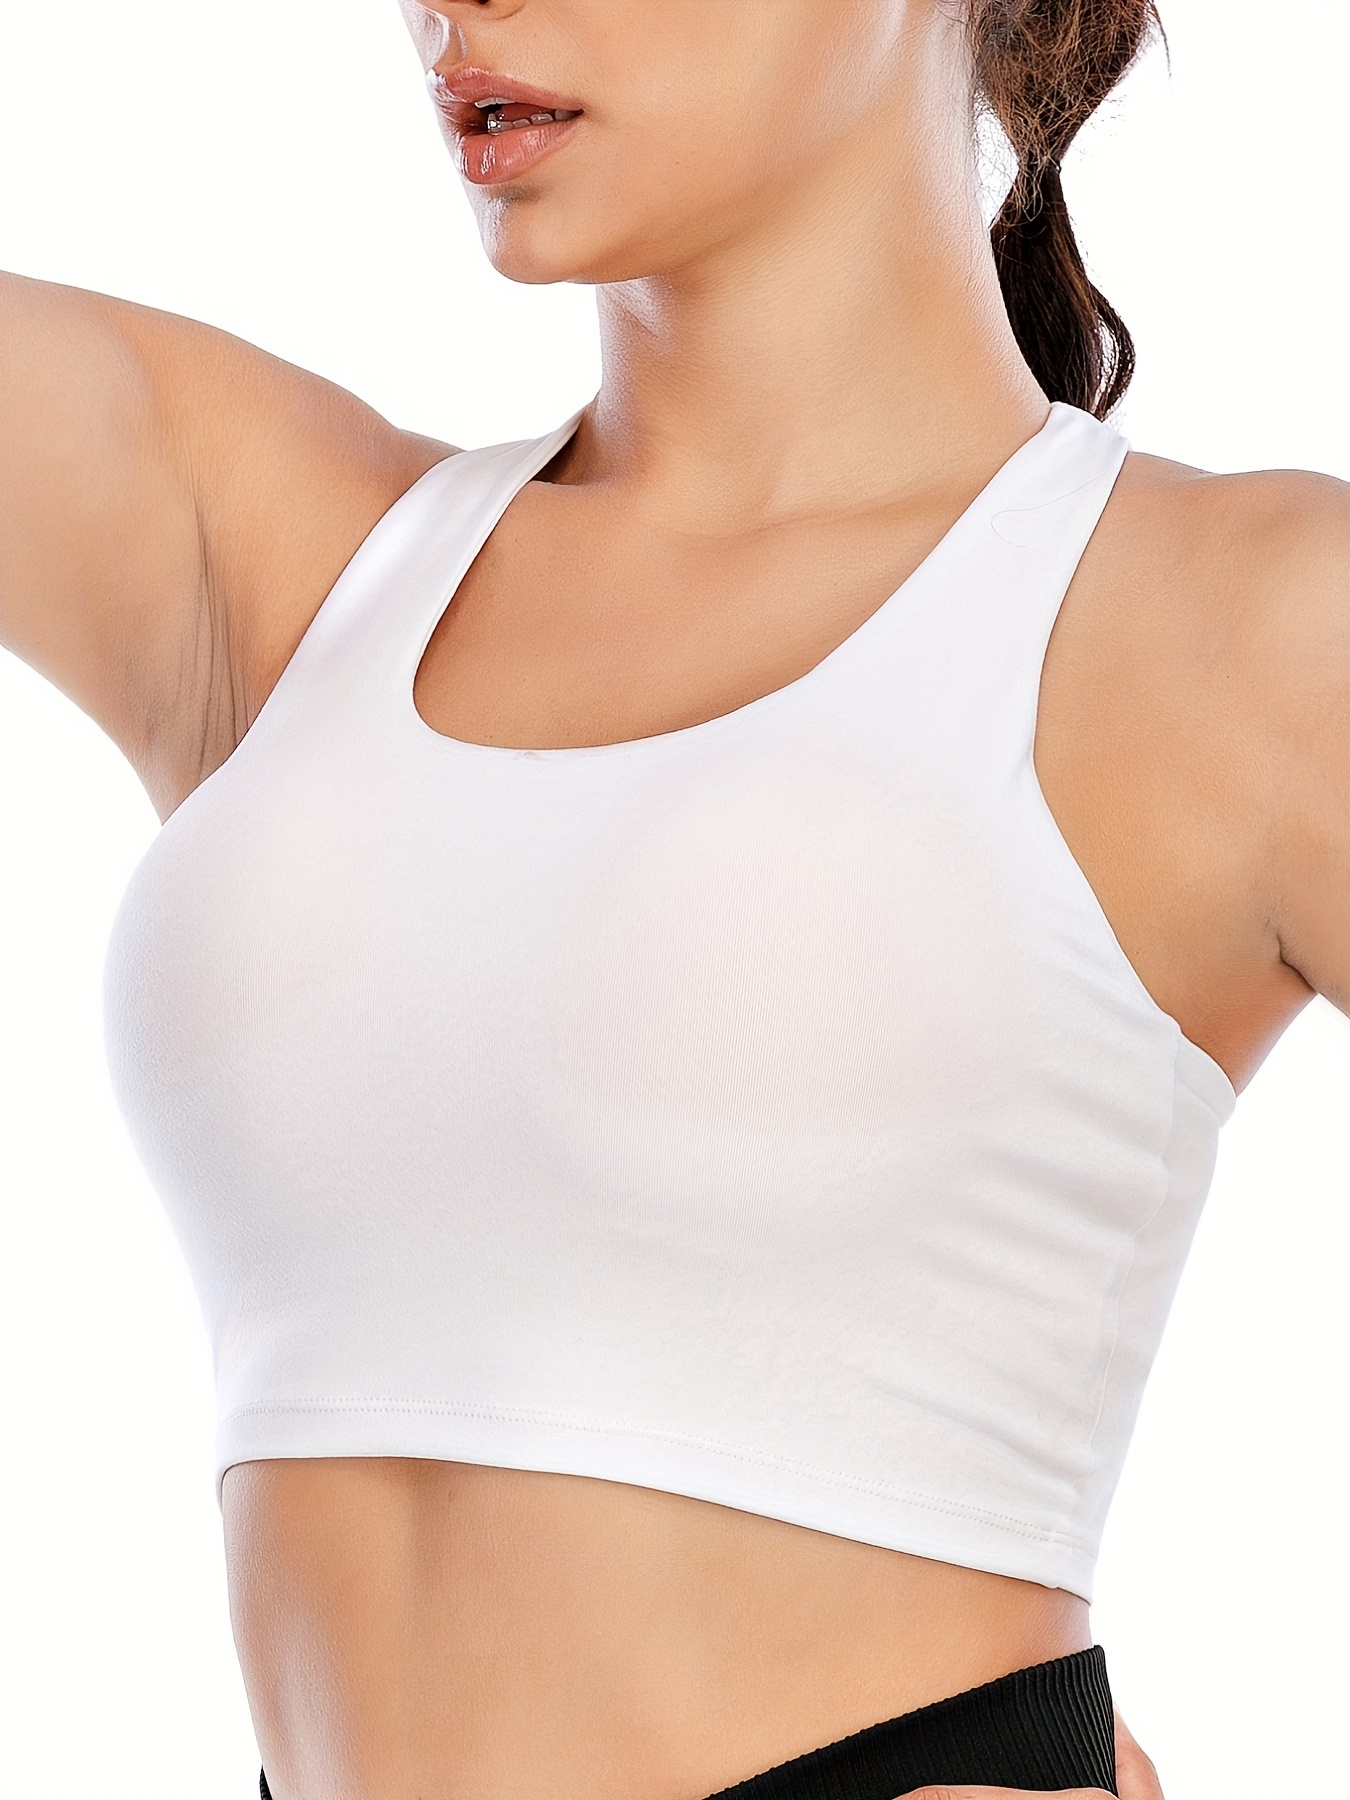 Aayomet Women Sports Bras Back Padded Workout Tank Tops Medium